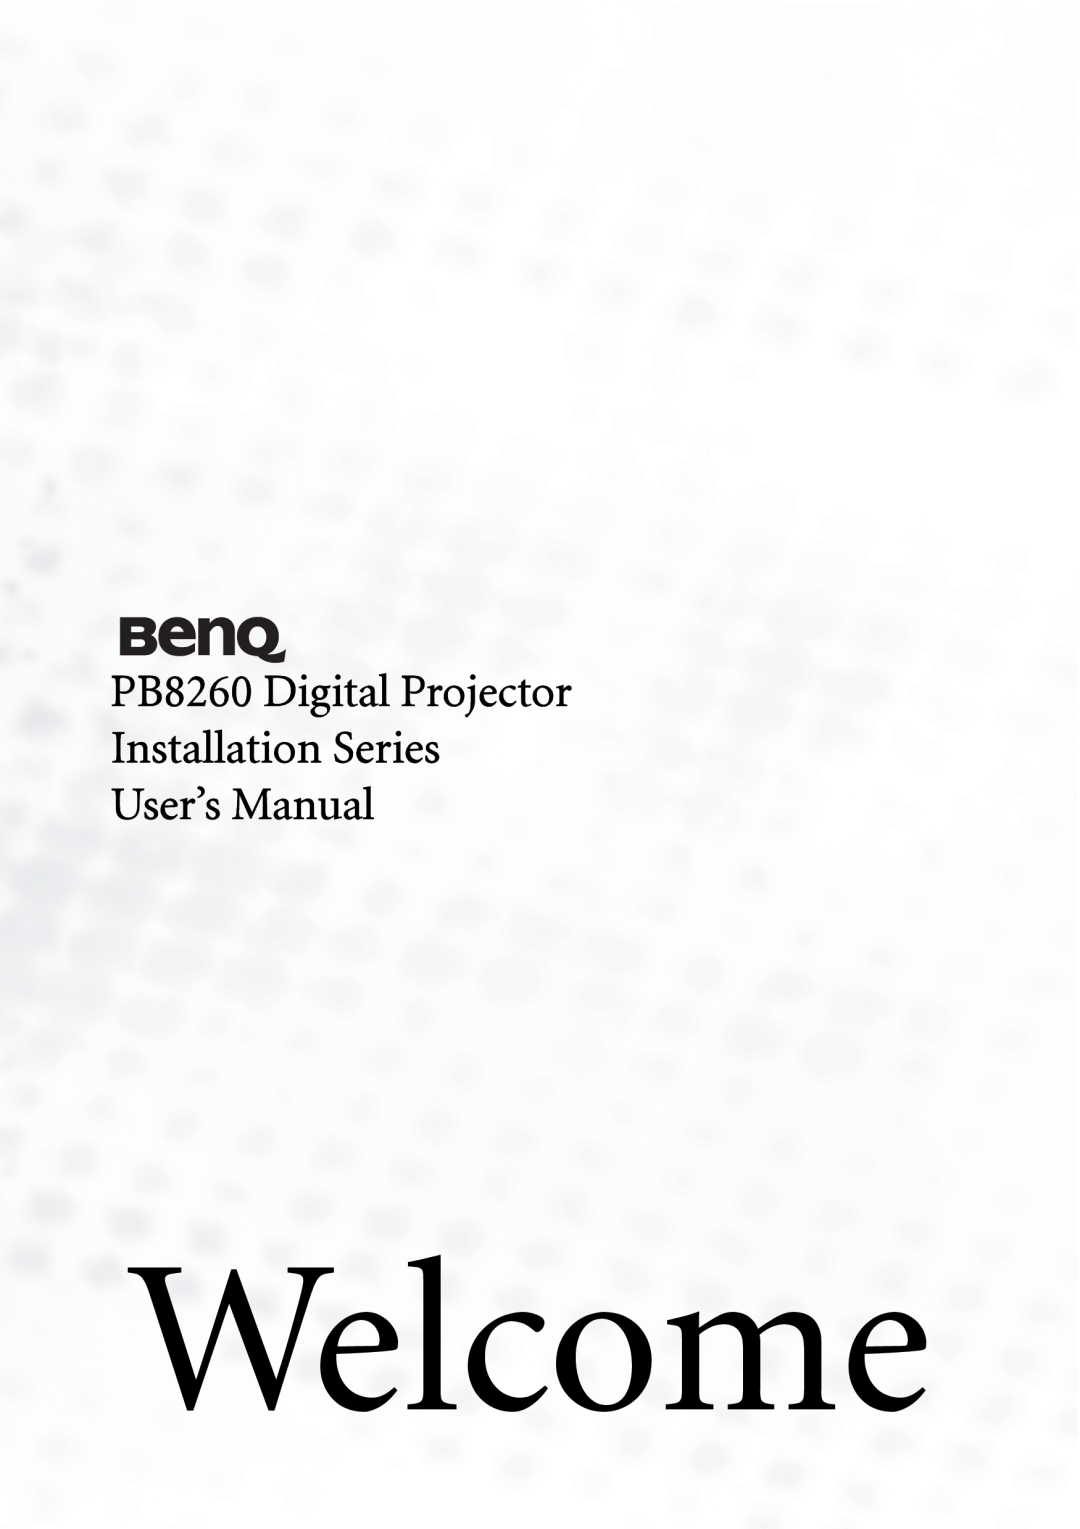 BenQ user manual Welcome, PB8260 Digital Projector Installation Series User’s Manual 